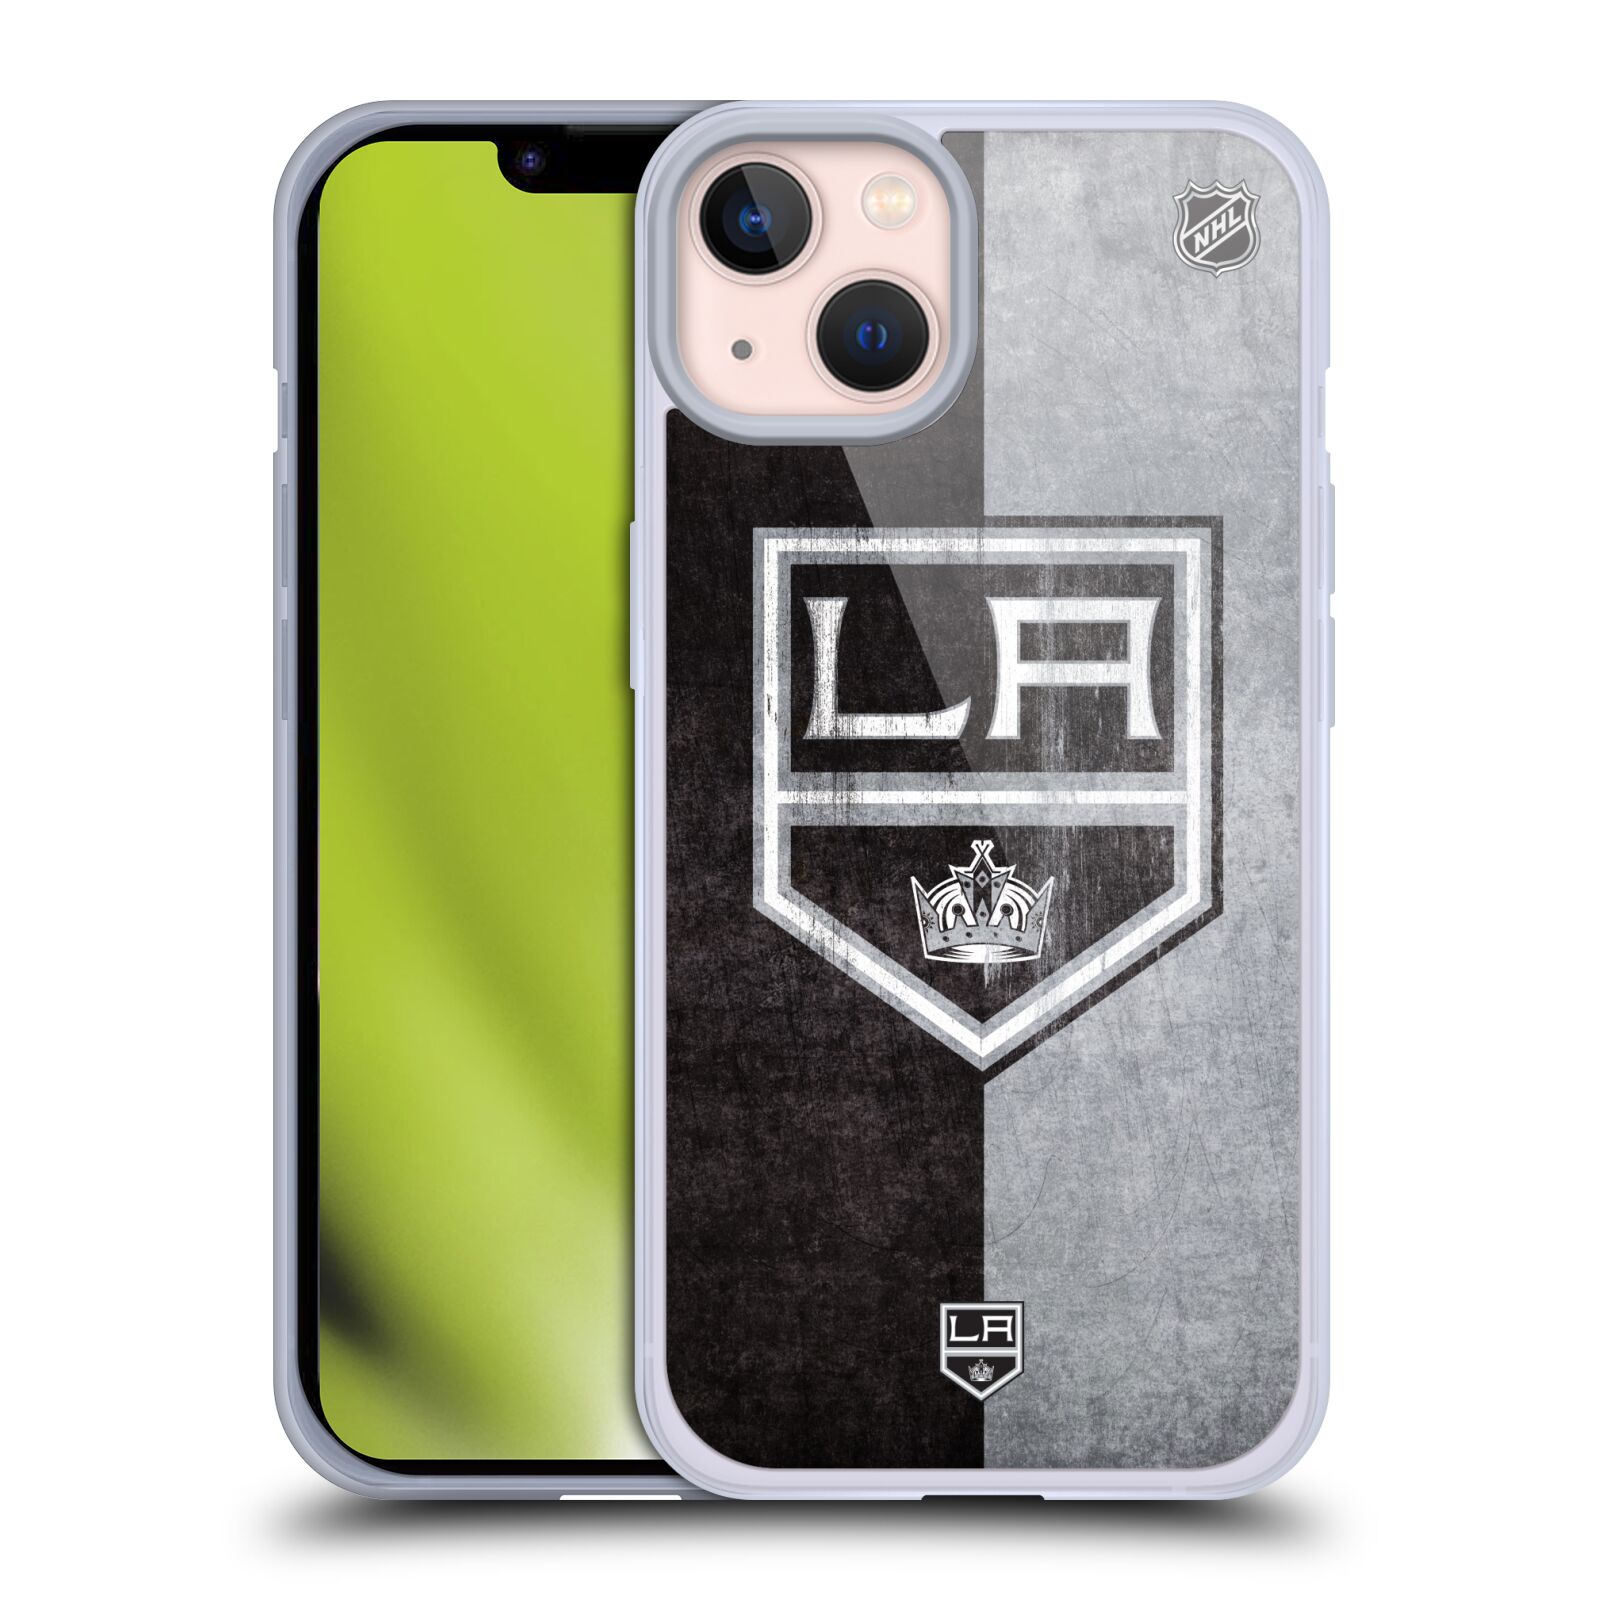 Silikonové pouzdro na mobil Apple iPhone 13 - NHL - Půlené logo Los Angeles Kings (Silikonový kryt, obal, pouzdro na mobilní telefon Apple iPhone 13 s licencovaným motivem NHL - Půlené logo Los Angeles Kings)